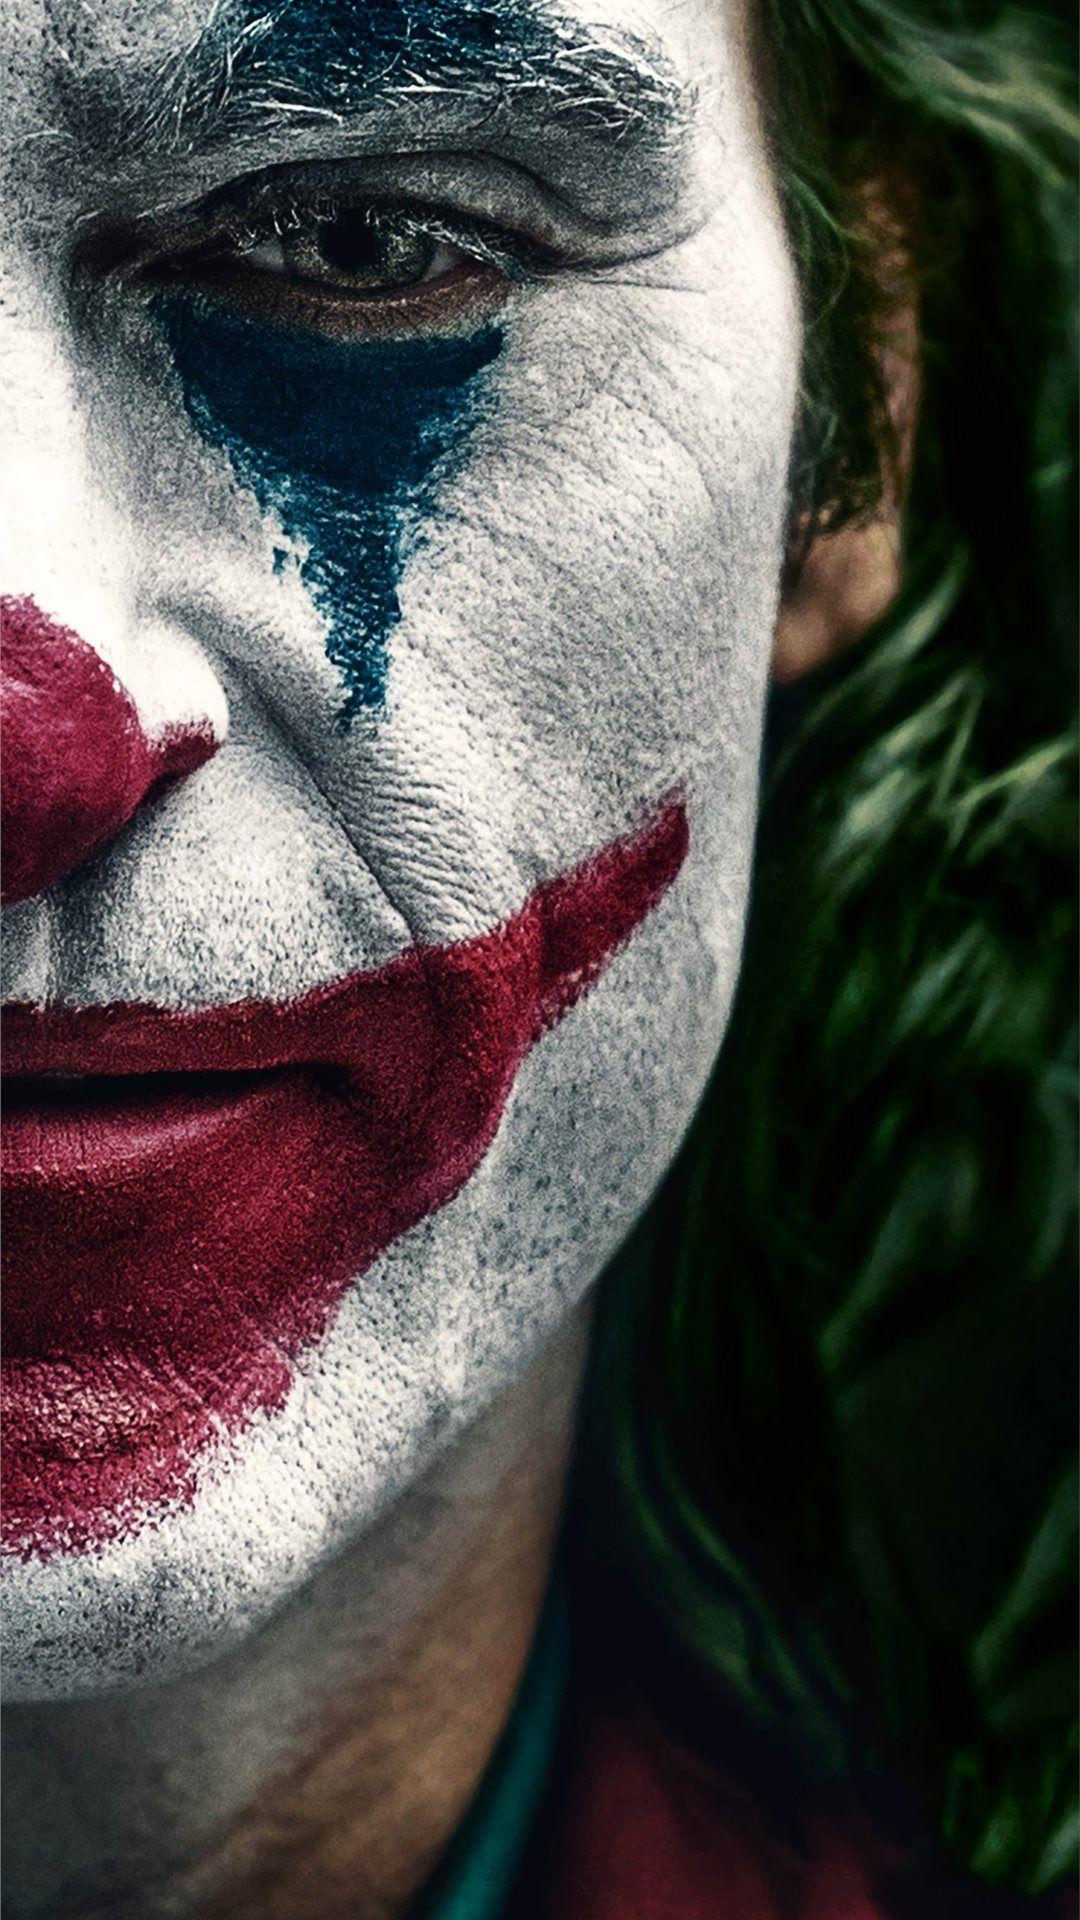 Free download the joker 2019 movie wallpaper , beaty your iphone. #movies # joker #poster Movies #Jok. Joker iphone wallpaper, Joker poster, Joker wallpaper